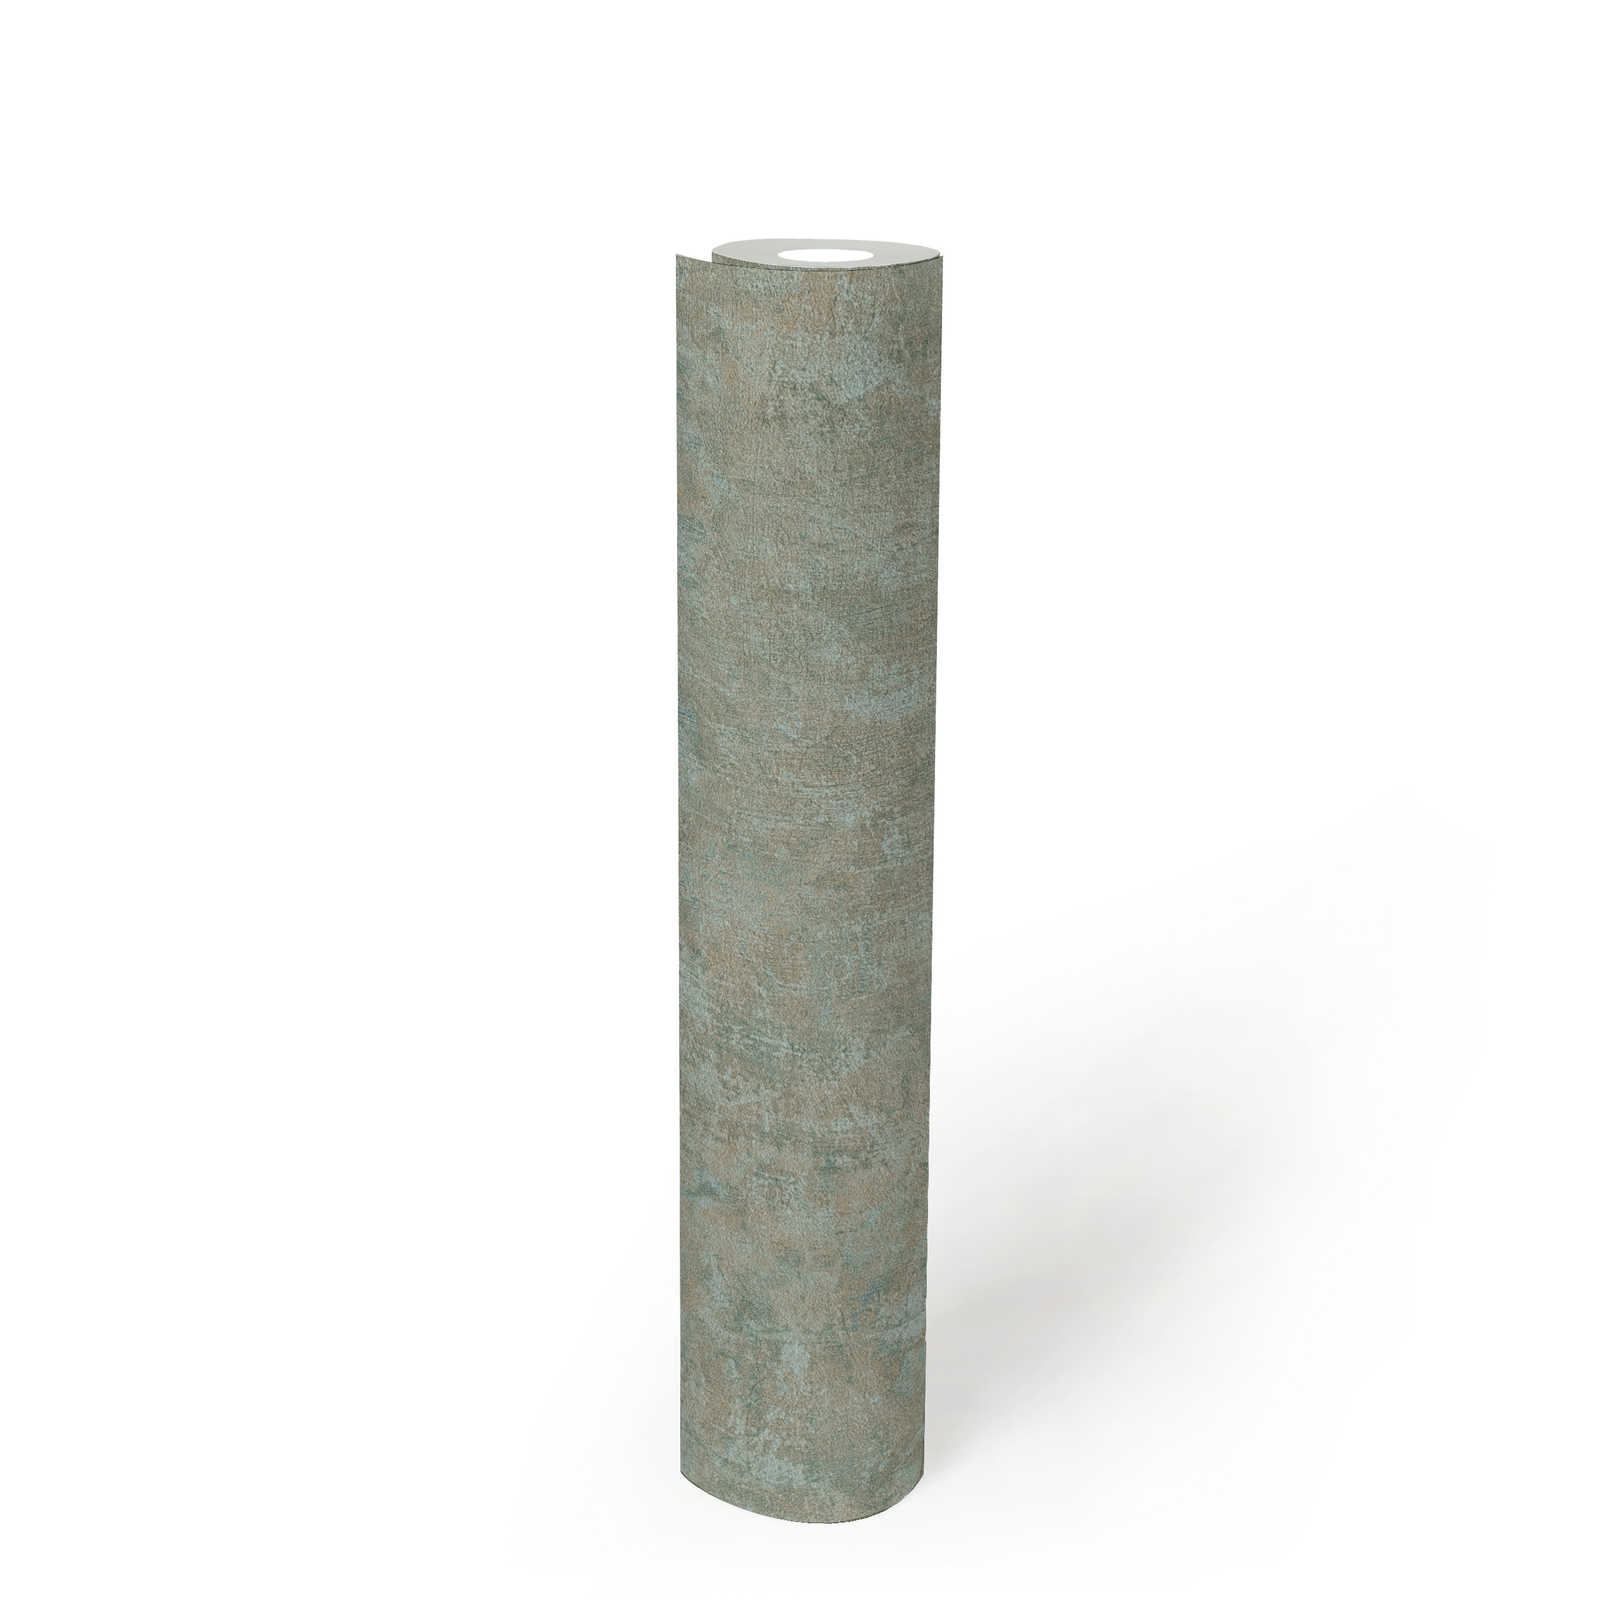             Papel pintado no tejido sin PVC con aspecto texturizado - verde, azul
        